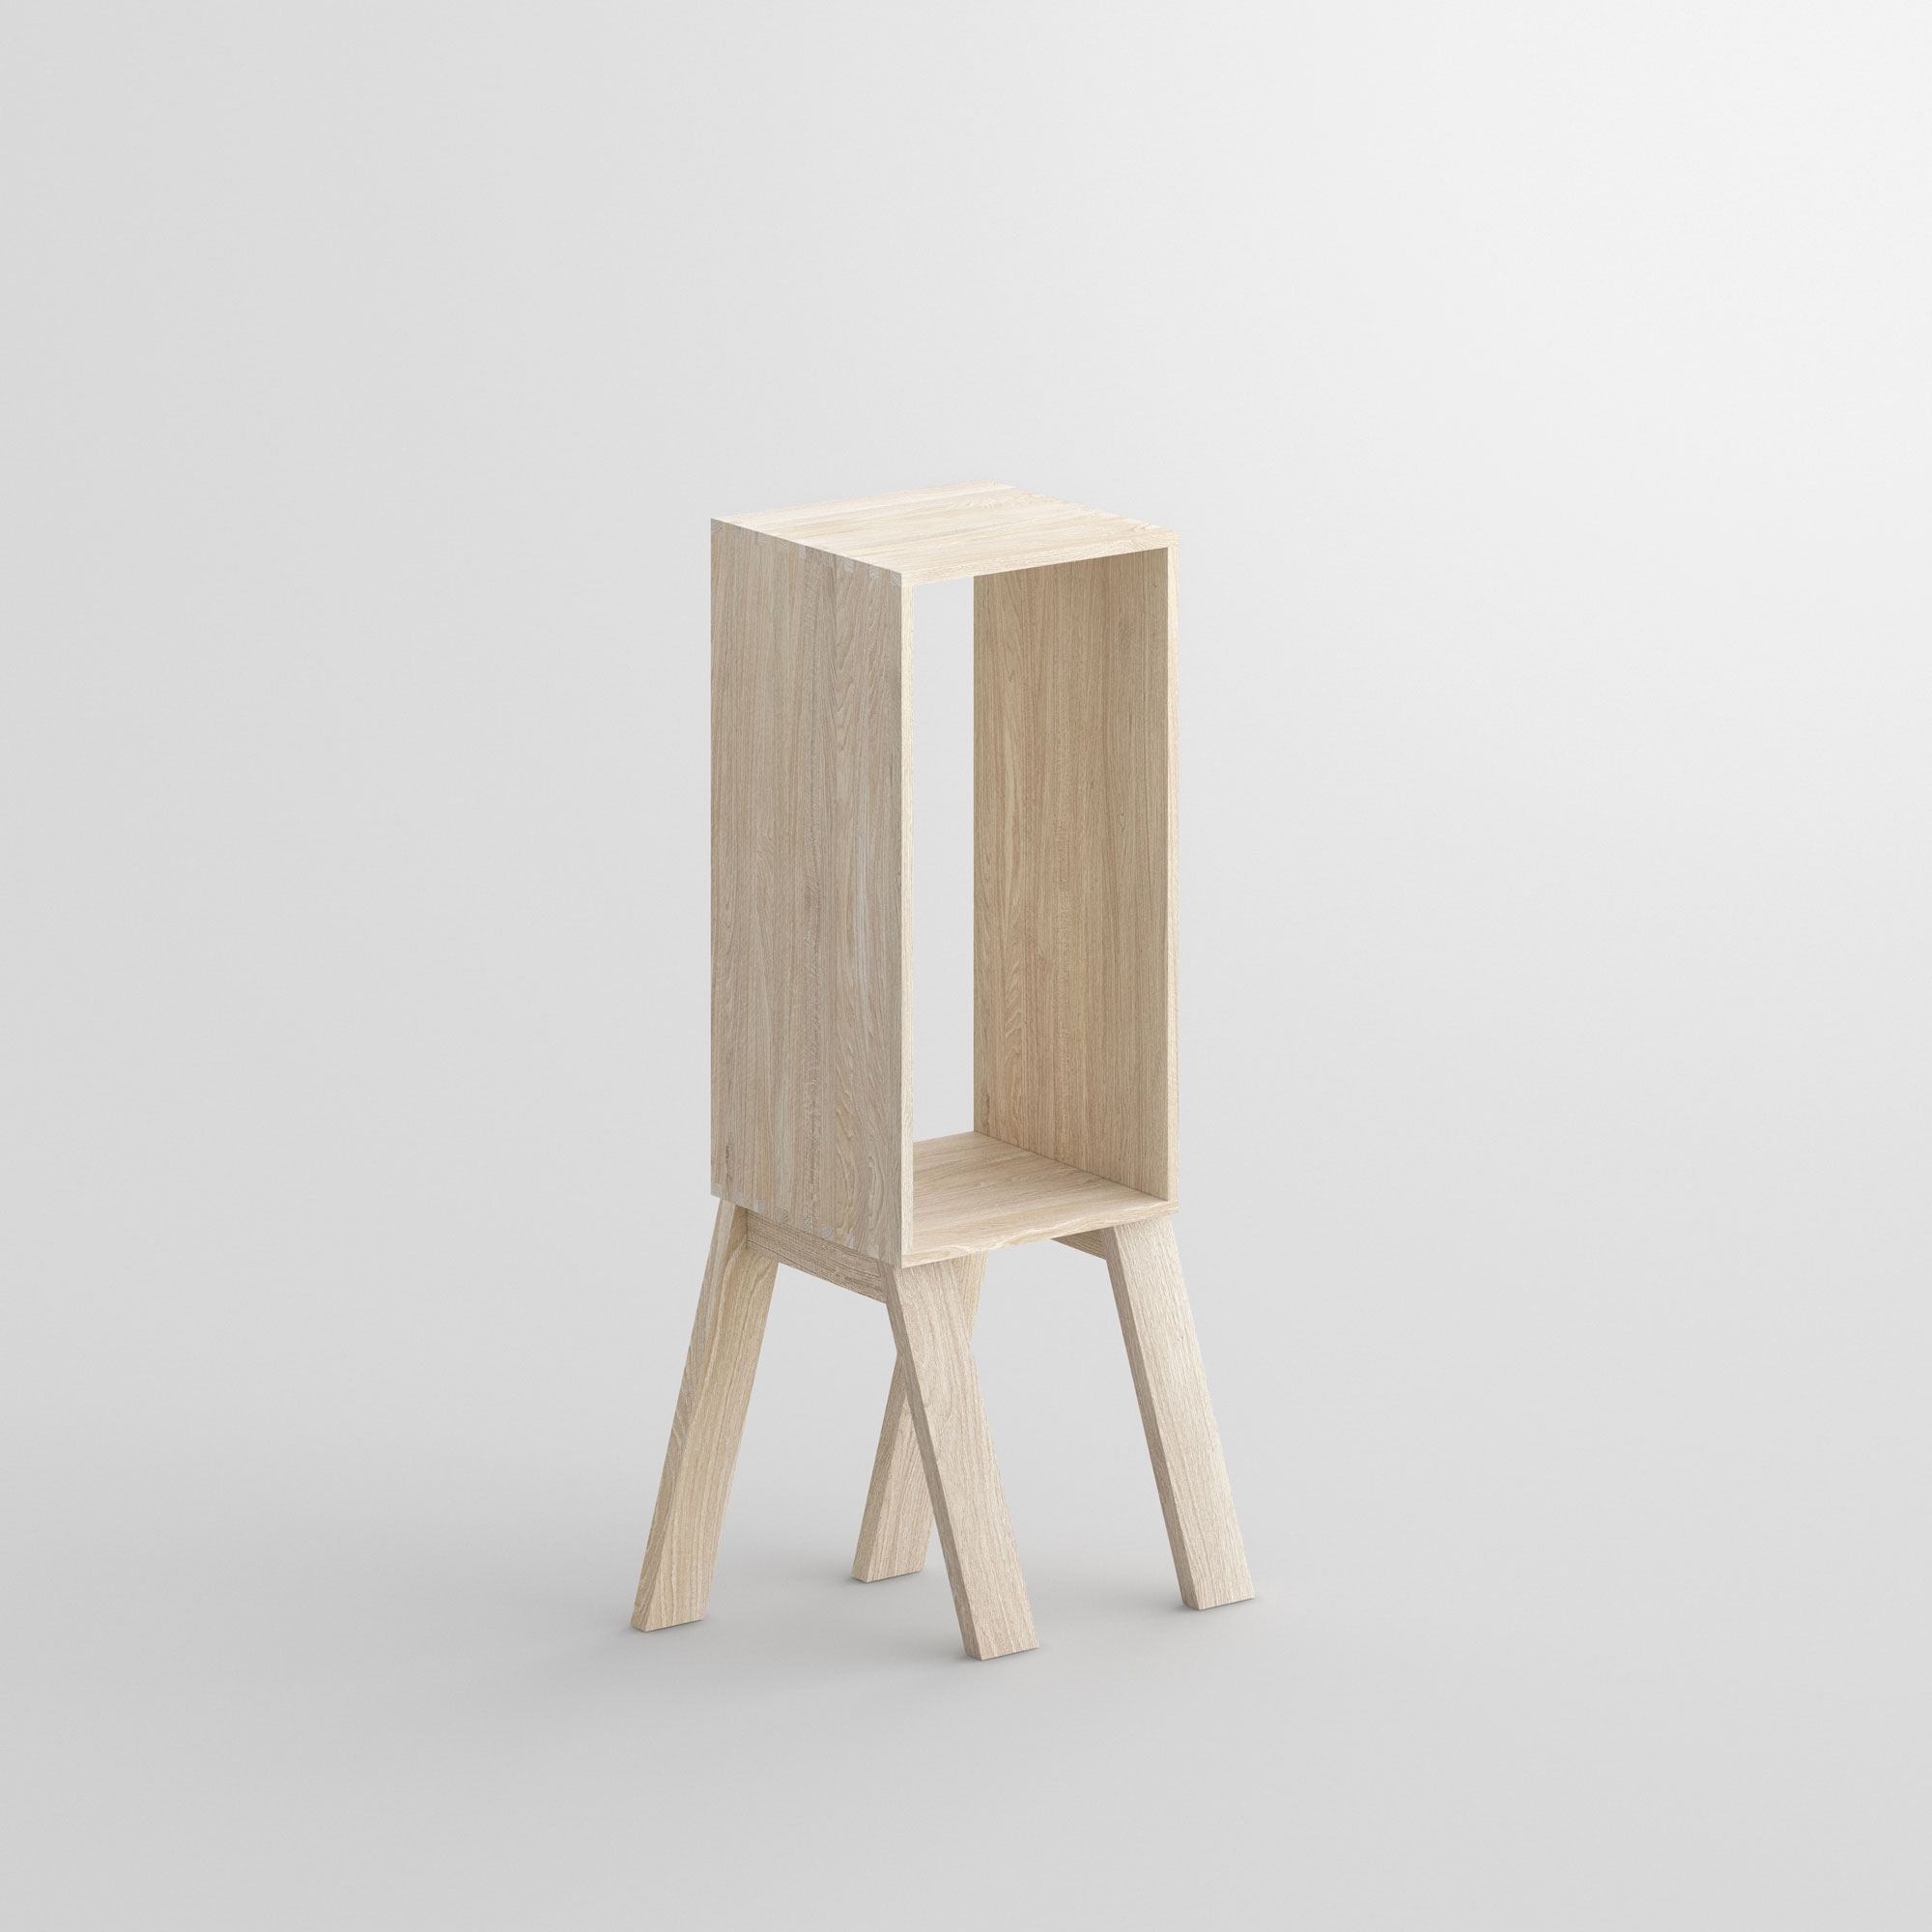 Designer Solid Wood Shelf GO cam1 custom made in solid wood by vitamin design